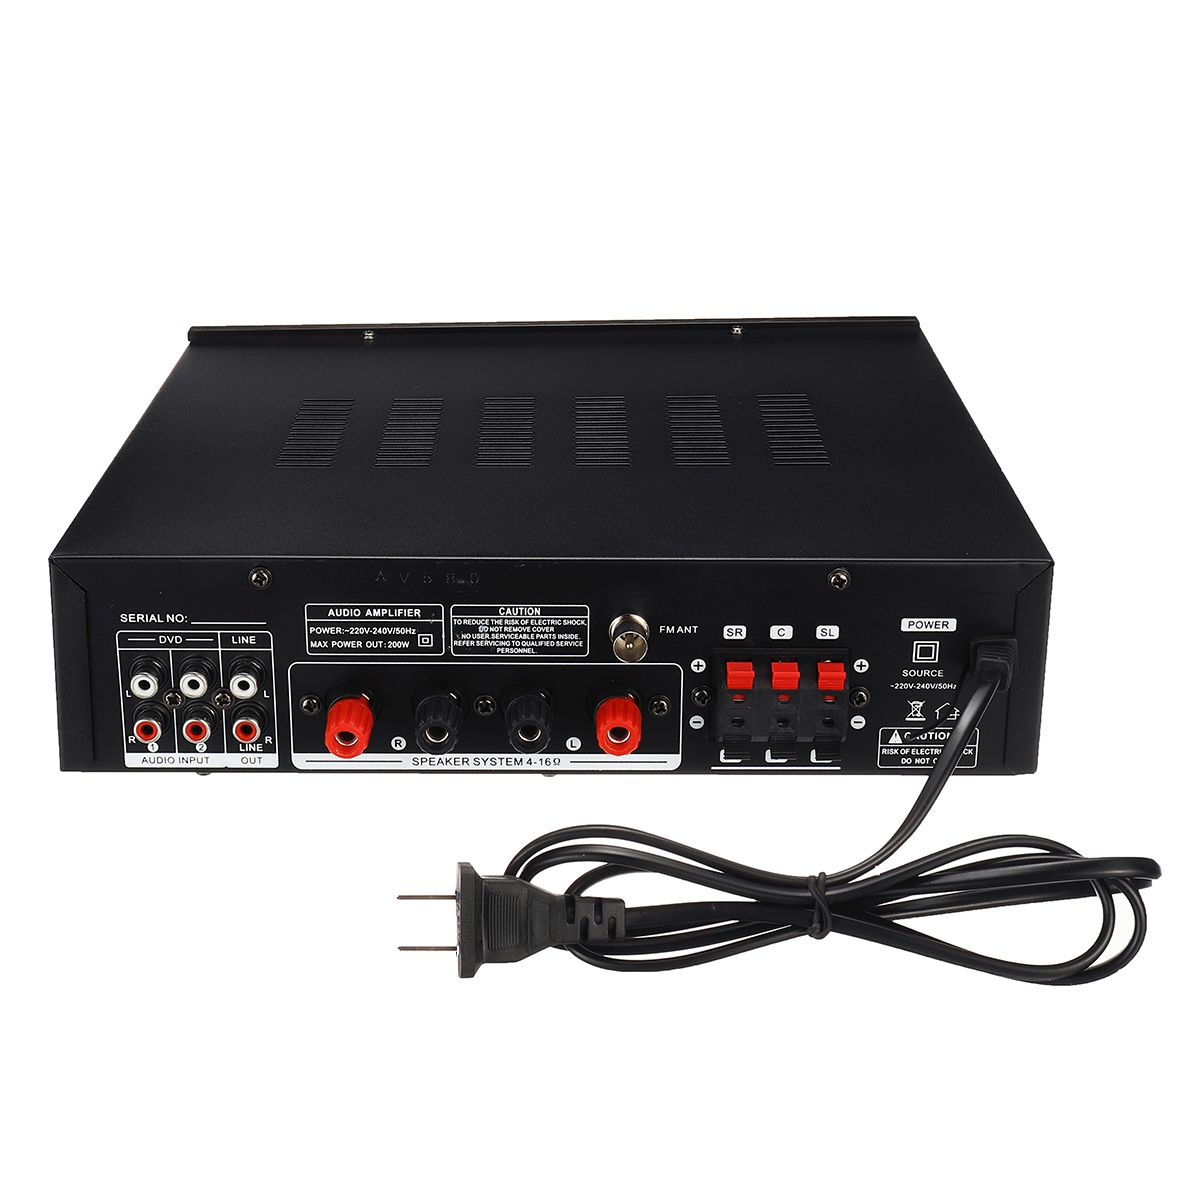 Sunbuck-AV-580USBBT-220V-920W-5CH-buetooth-Stereo-Amplifier-LED-Support-USB-Disk-SD-Mp3-Player-Home-1638948